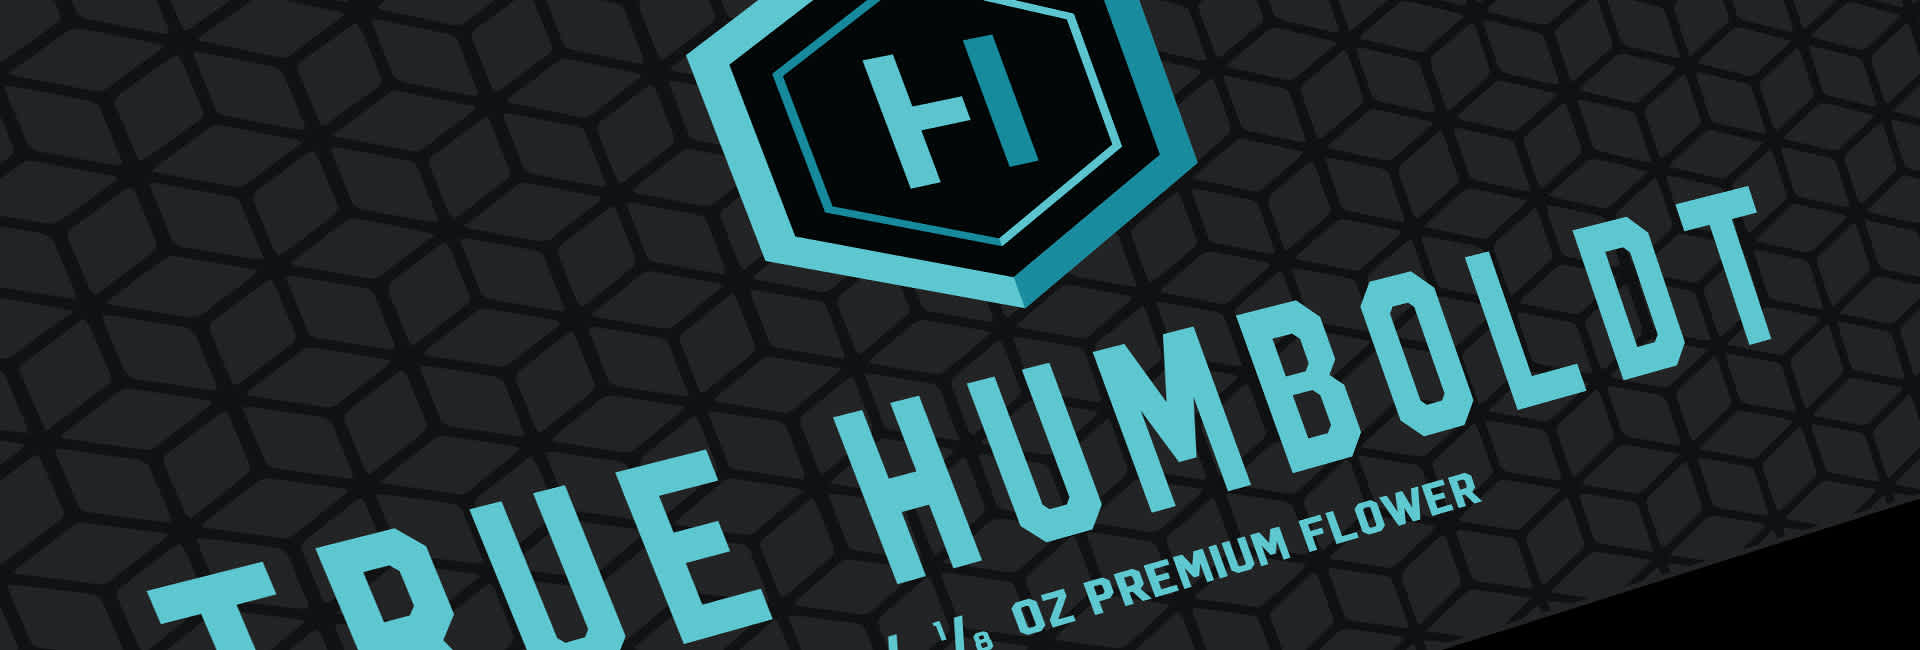 True Humboldt Label Project